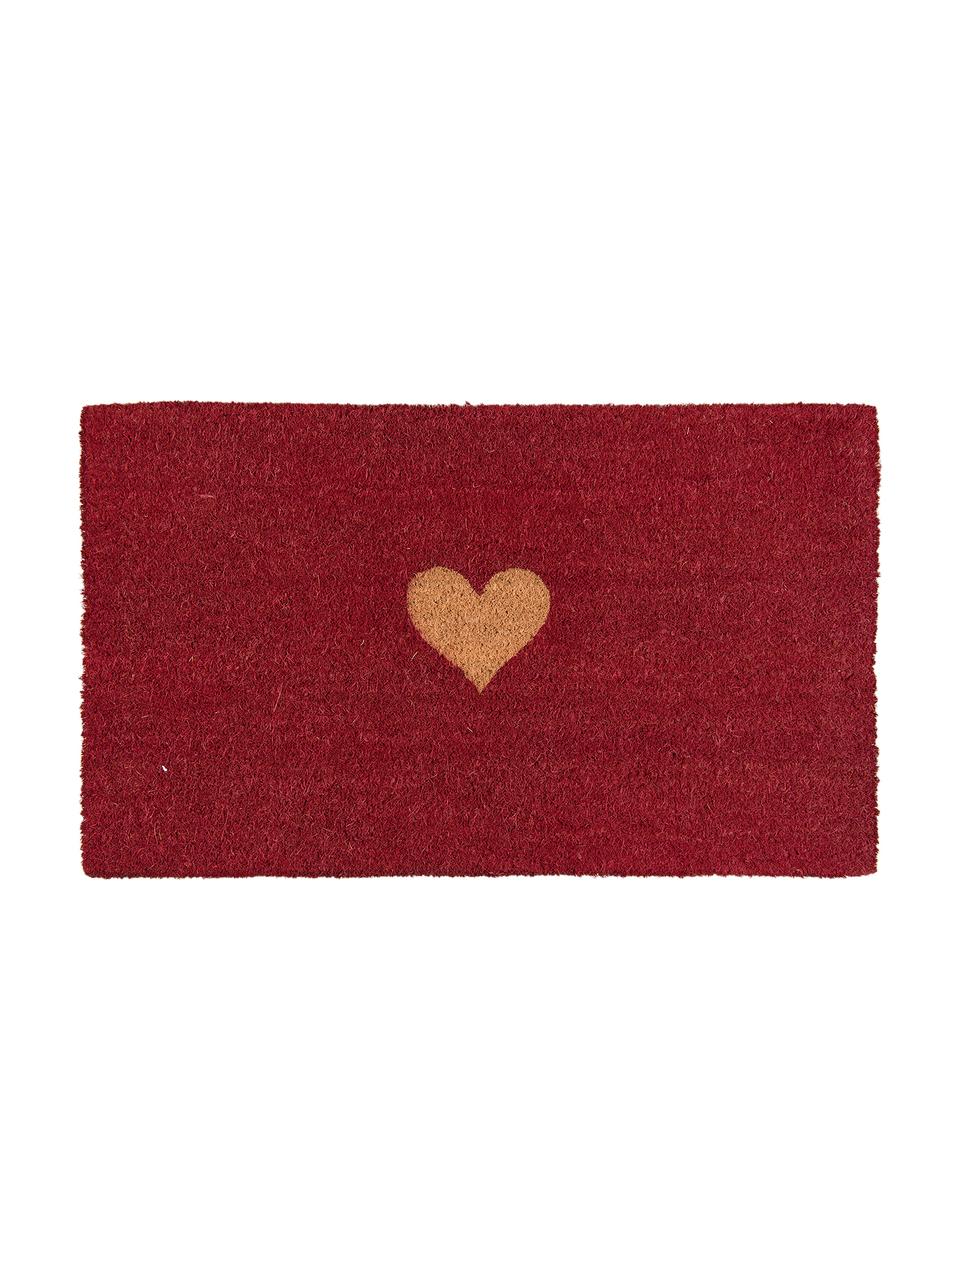 Deurmat Heart, Bovenzijde: kokosvezels, Onderzijde: PVC, Rood, bruin, B 45 x L 75 cm